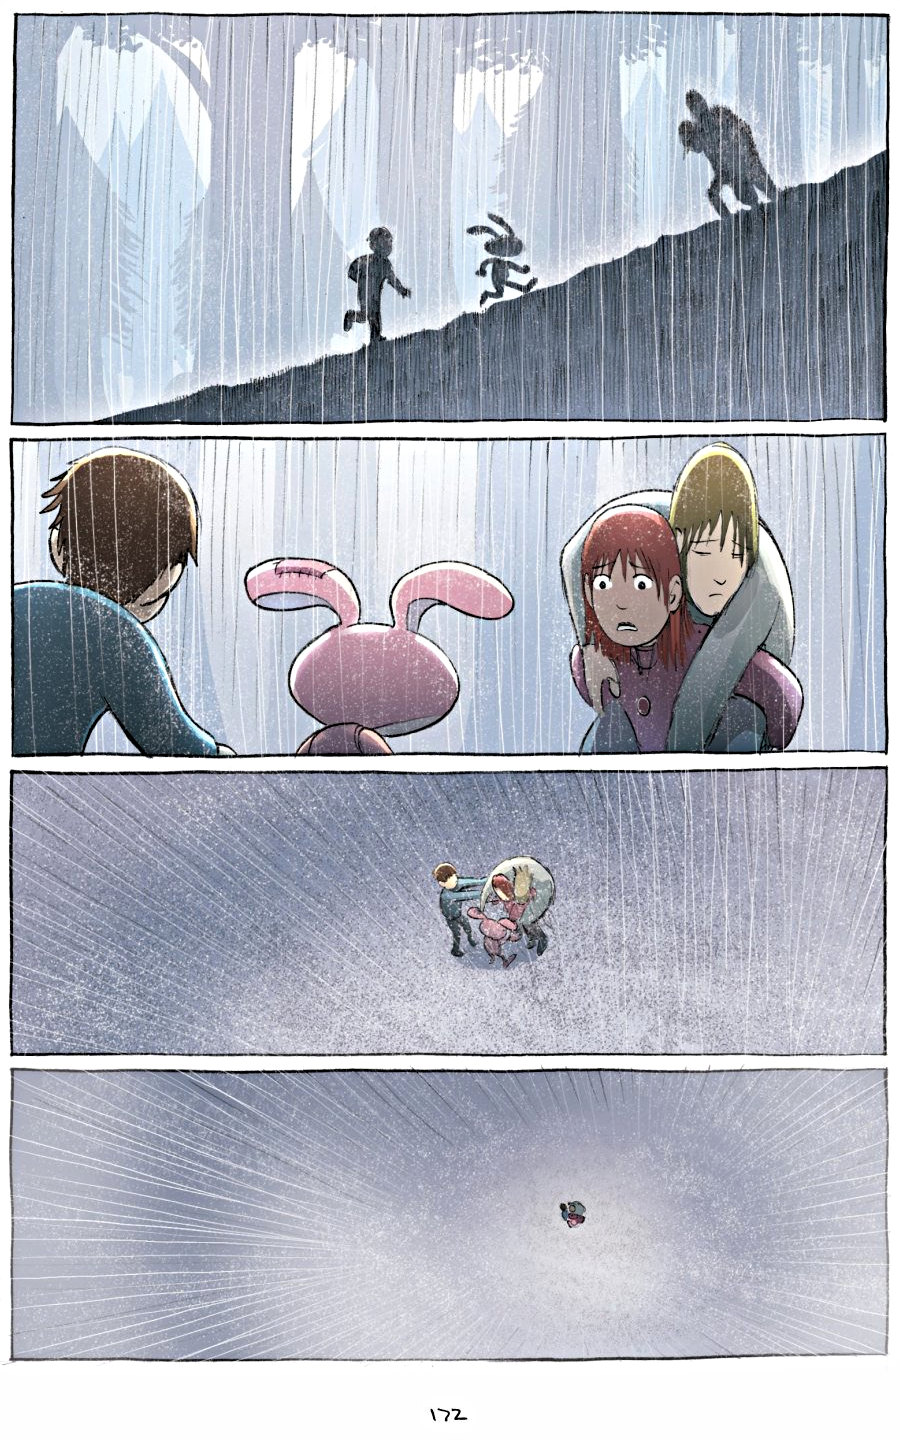 page 172 of amulet 1 stonekeeper graphic novel by kazu kibuishi - read online